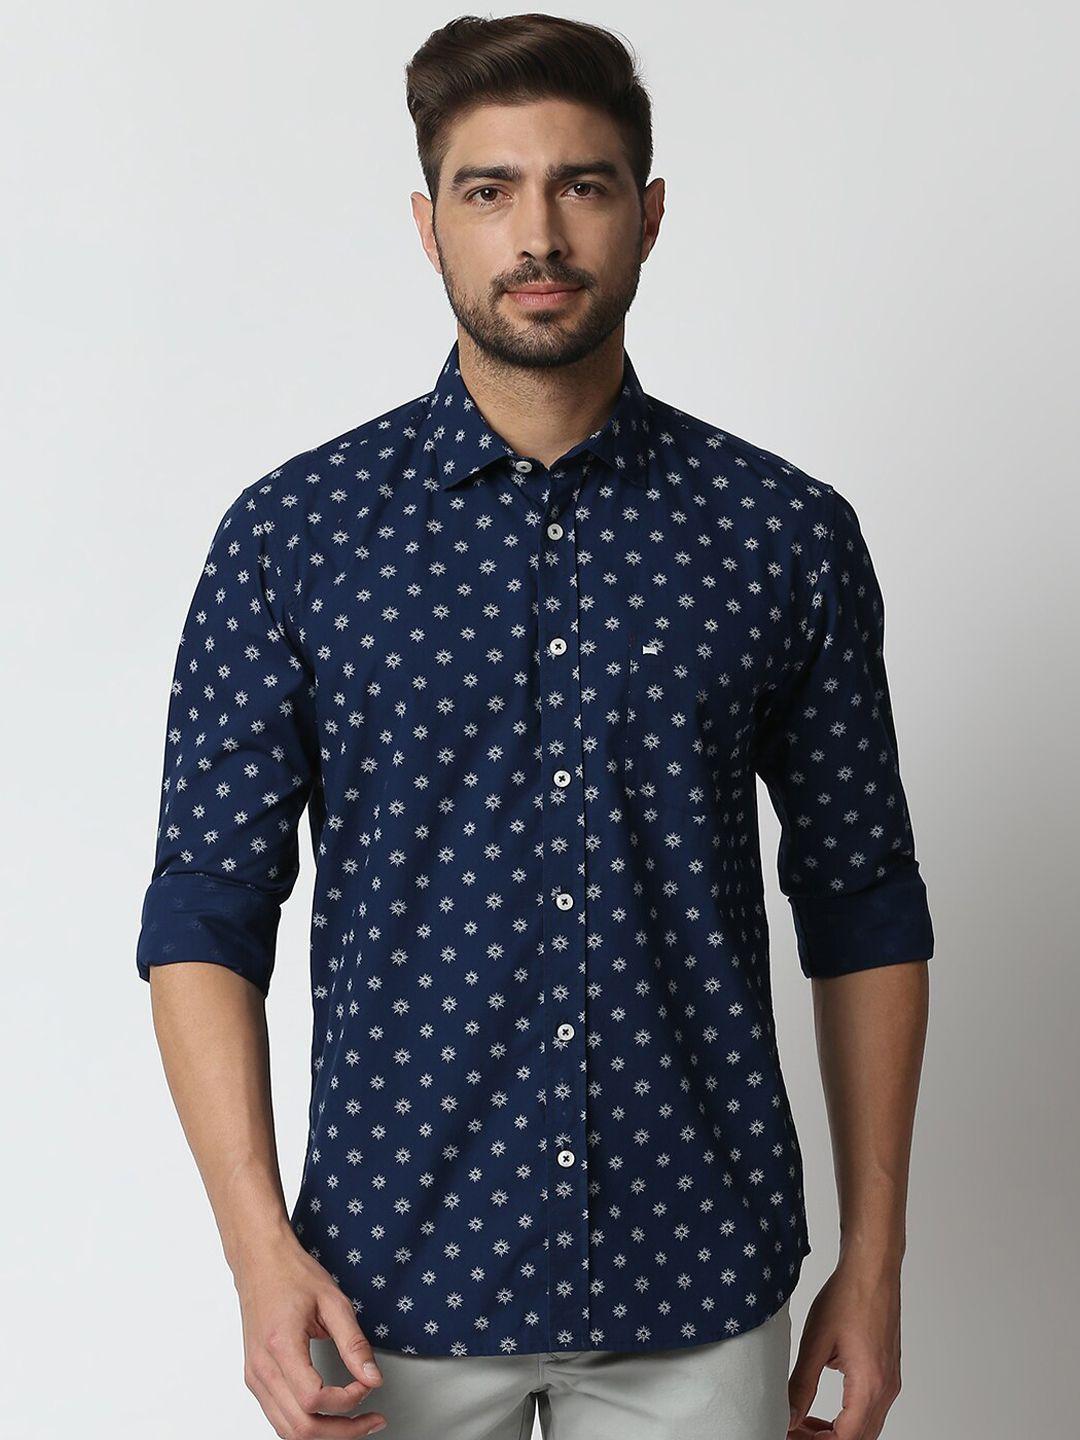 basics men navy blue & white slim fit conversational ditsy printed cotton casual shirt